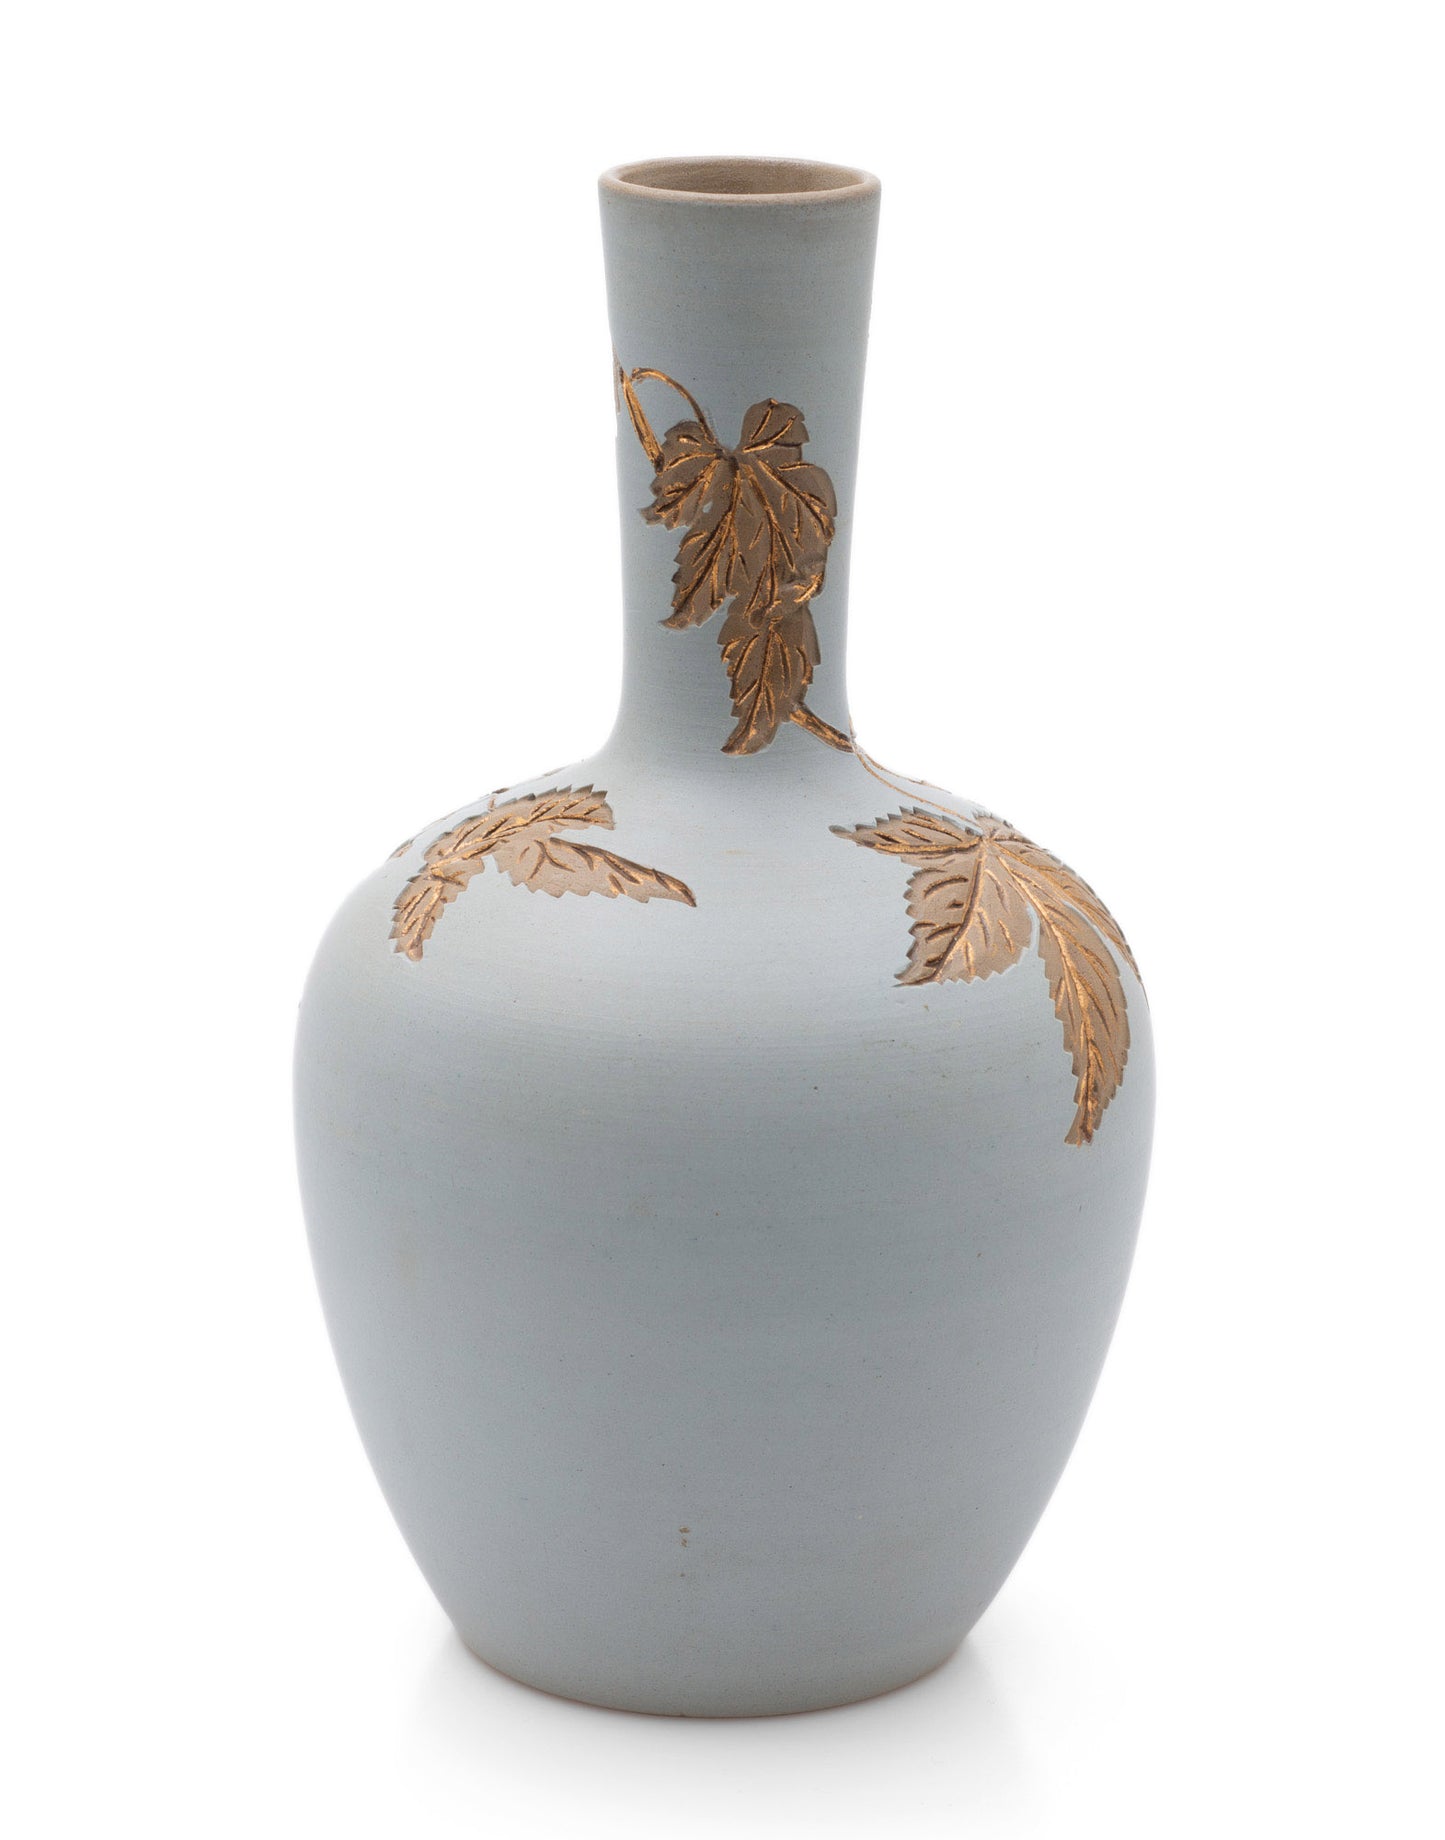 Antique Calvert & Lovatt Langley Ware Stoneware Sgraffito Vase in Duck Egg Blue (Code 2466)